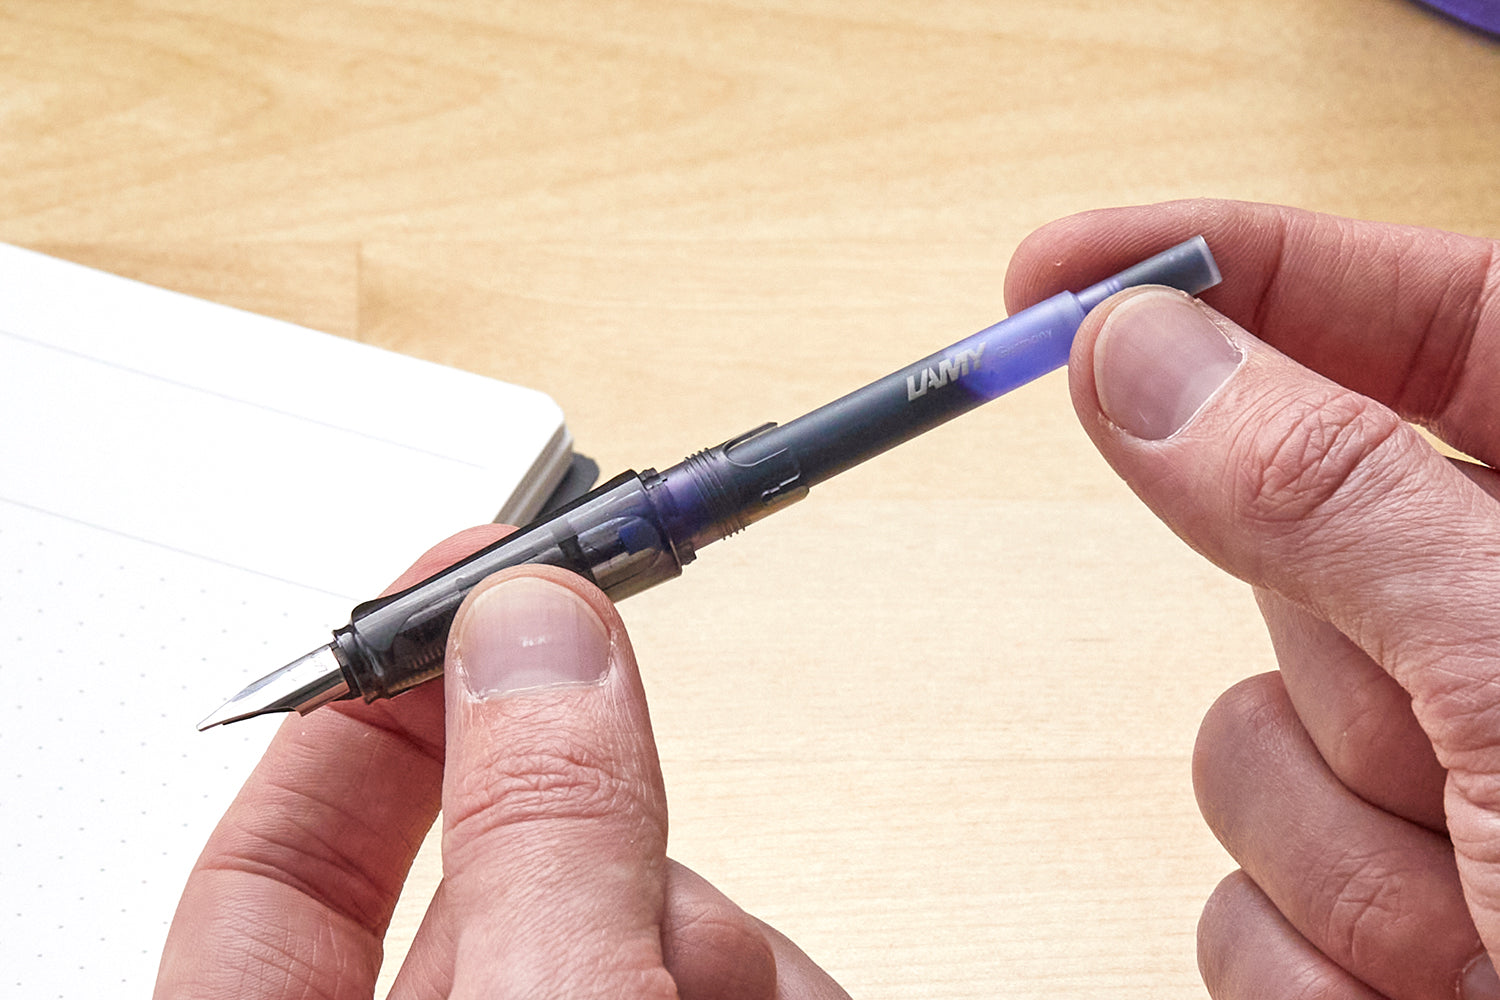 Installing an ink cartridge into a LAMY pen